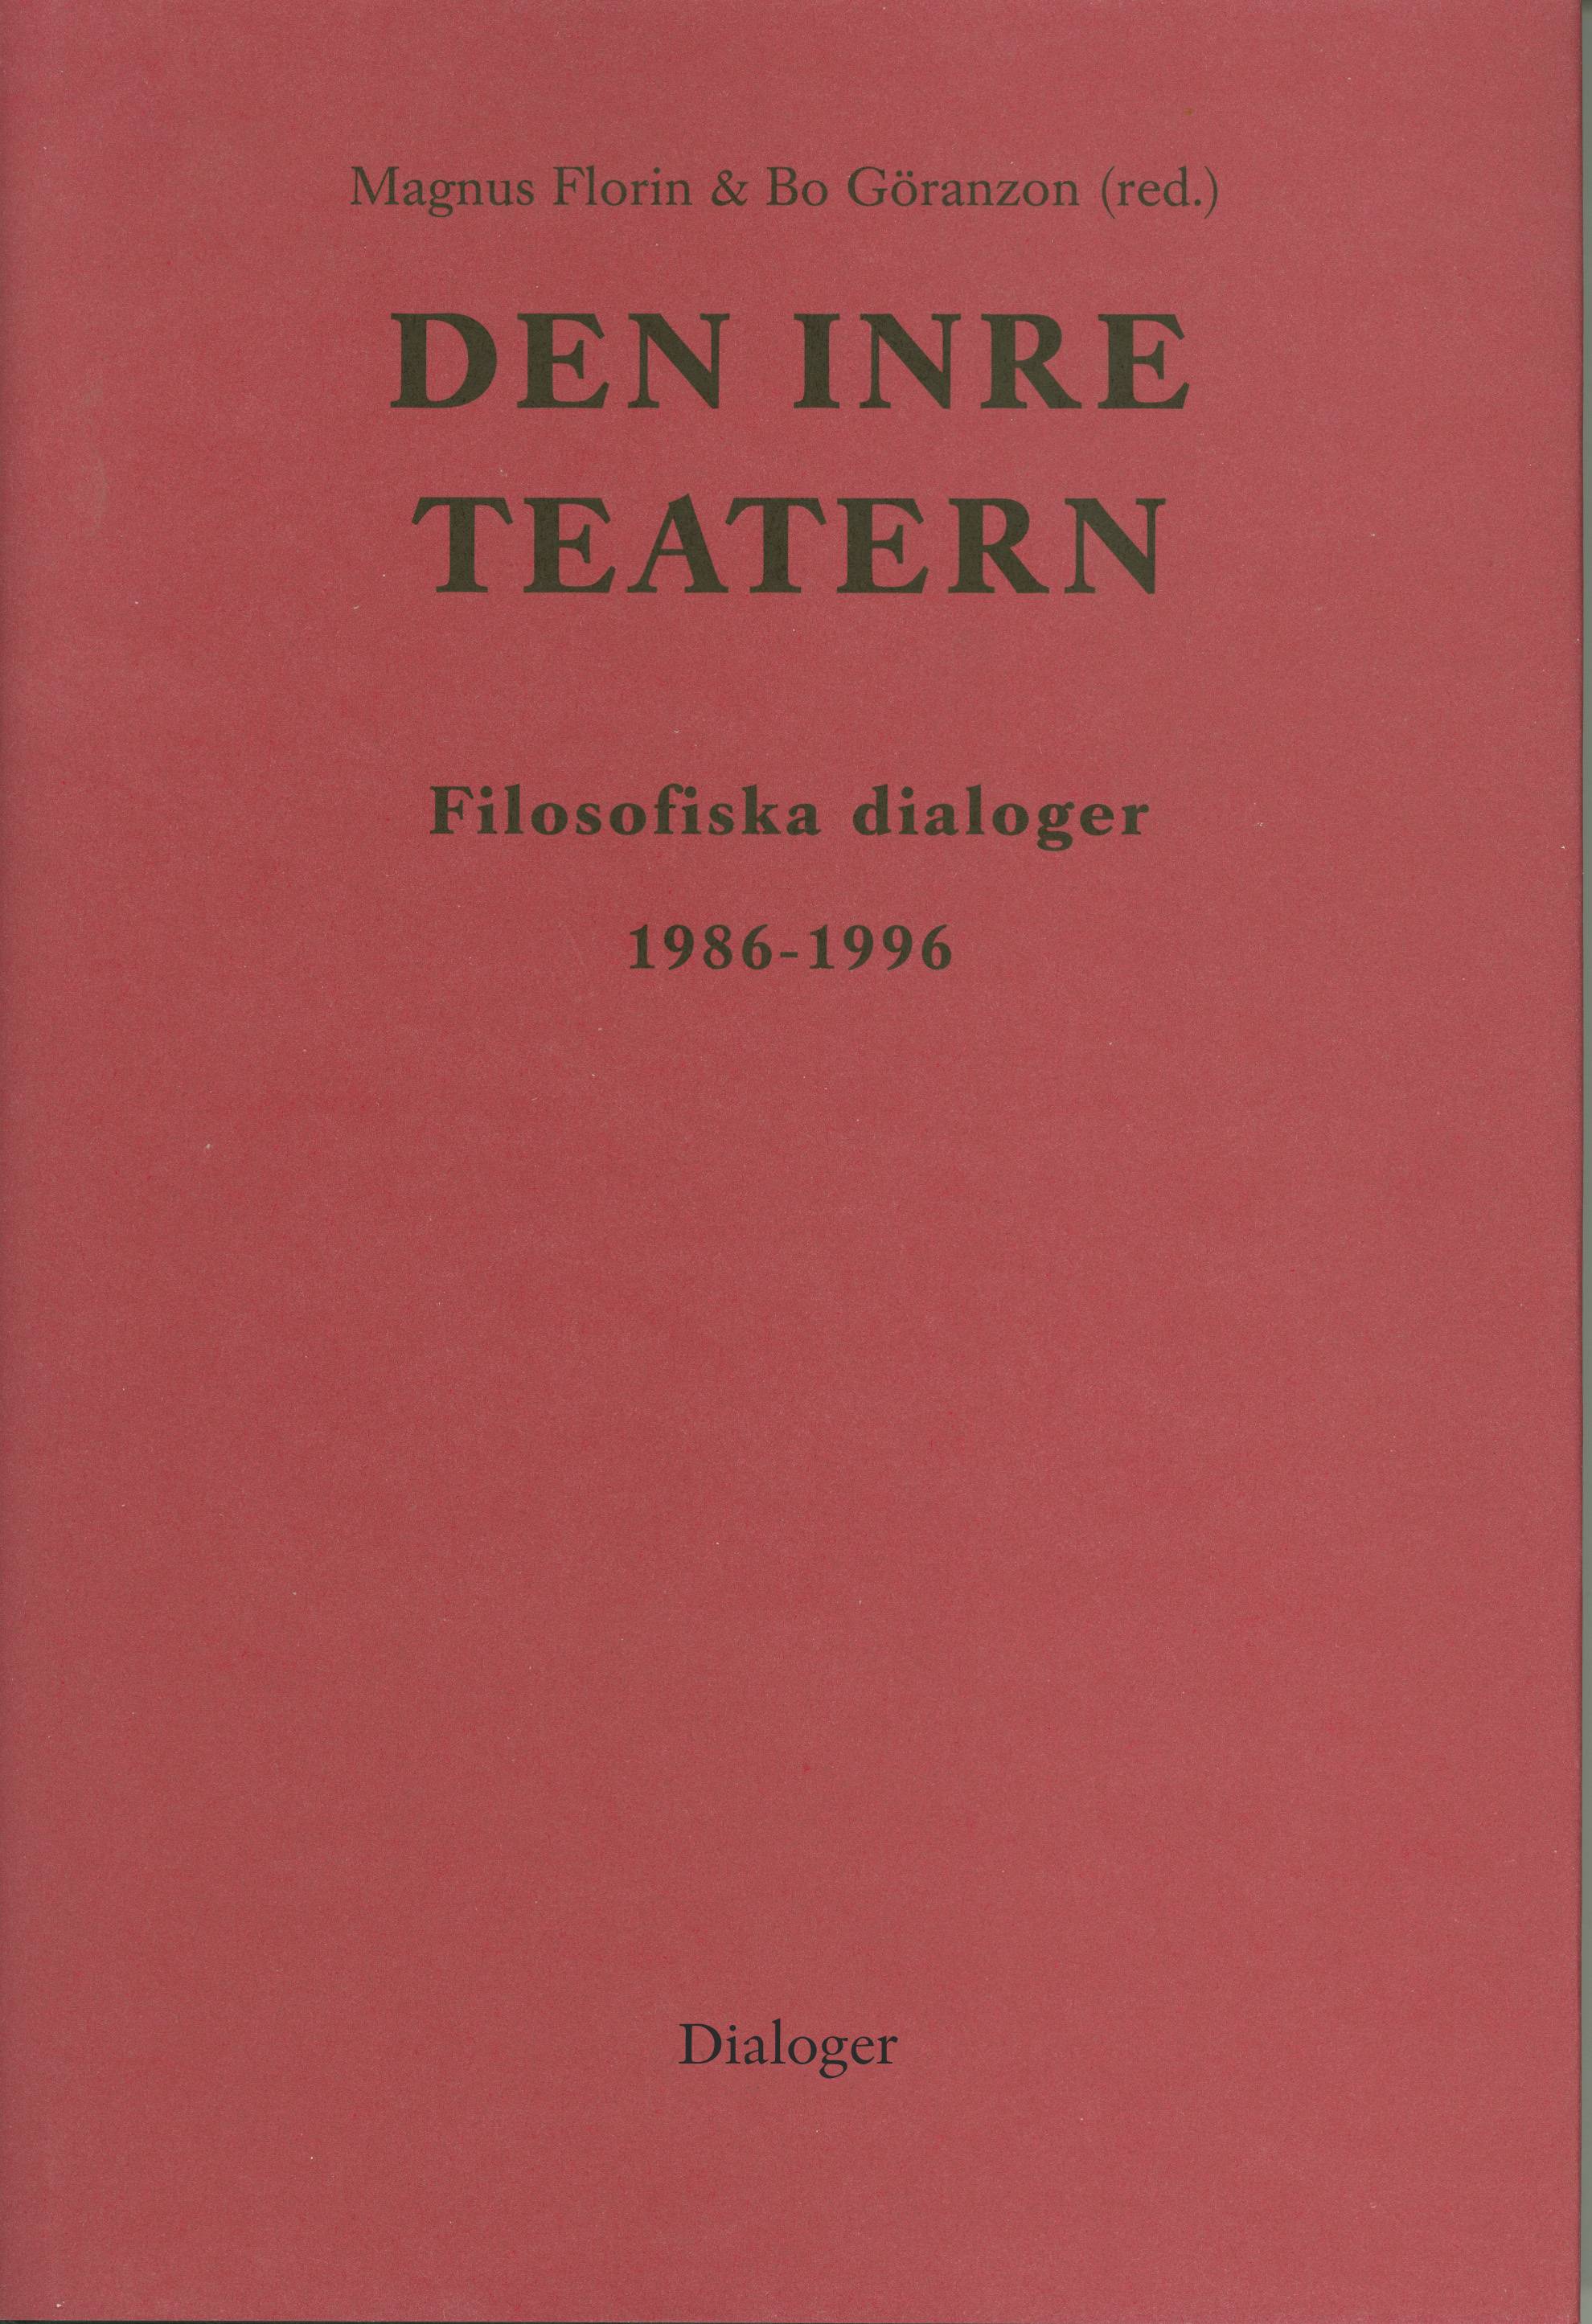 Den inre teatern : filosofiska dialoger 1986-1996